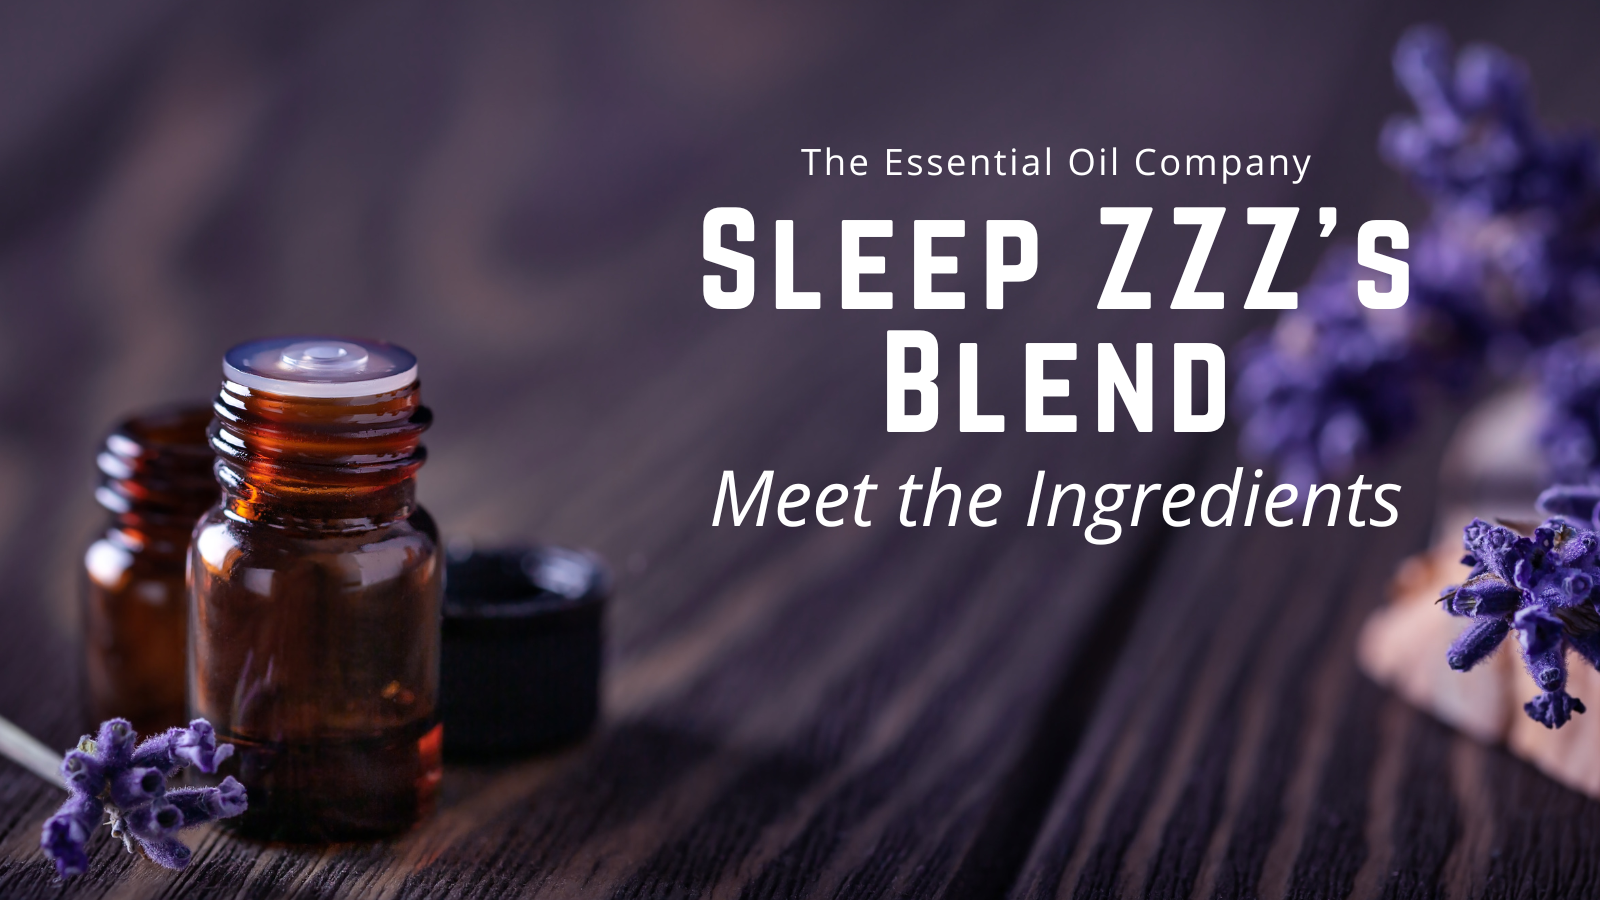 Sleep zzz's blend of essential oils ingredients